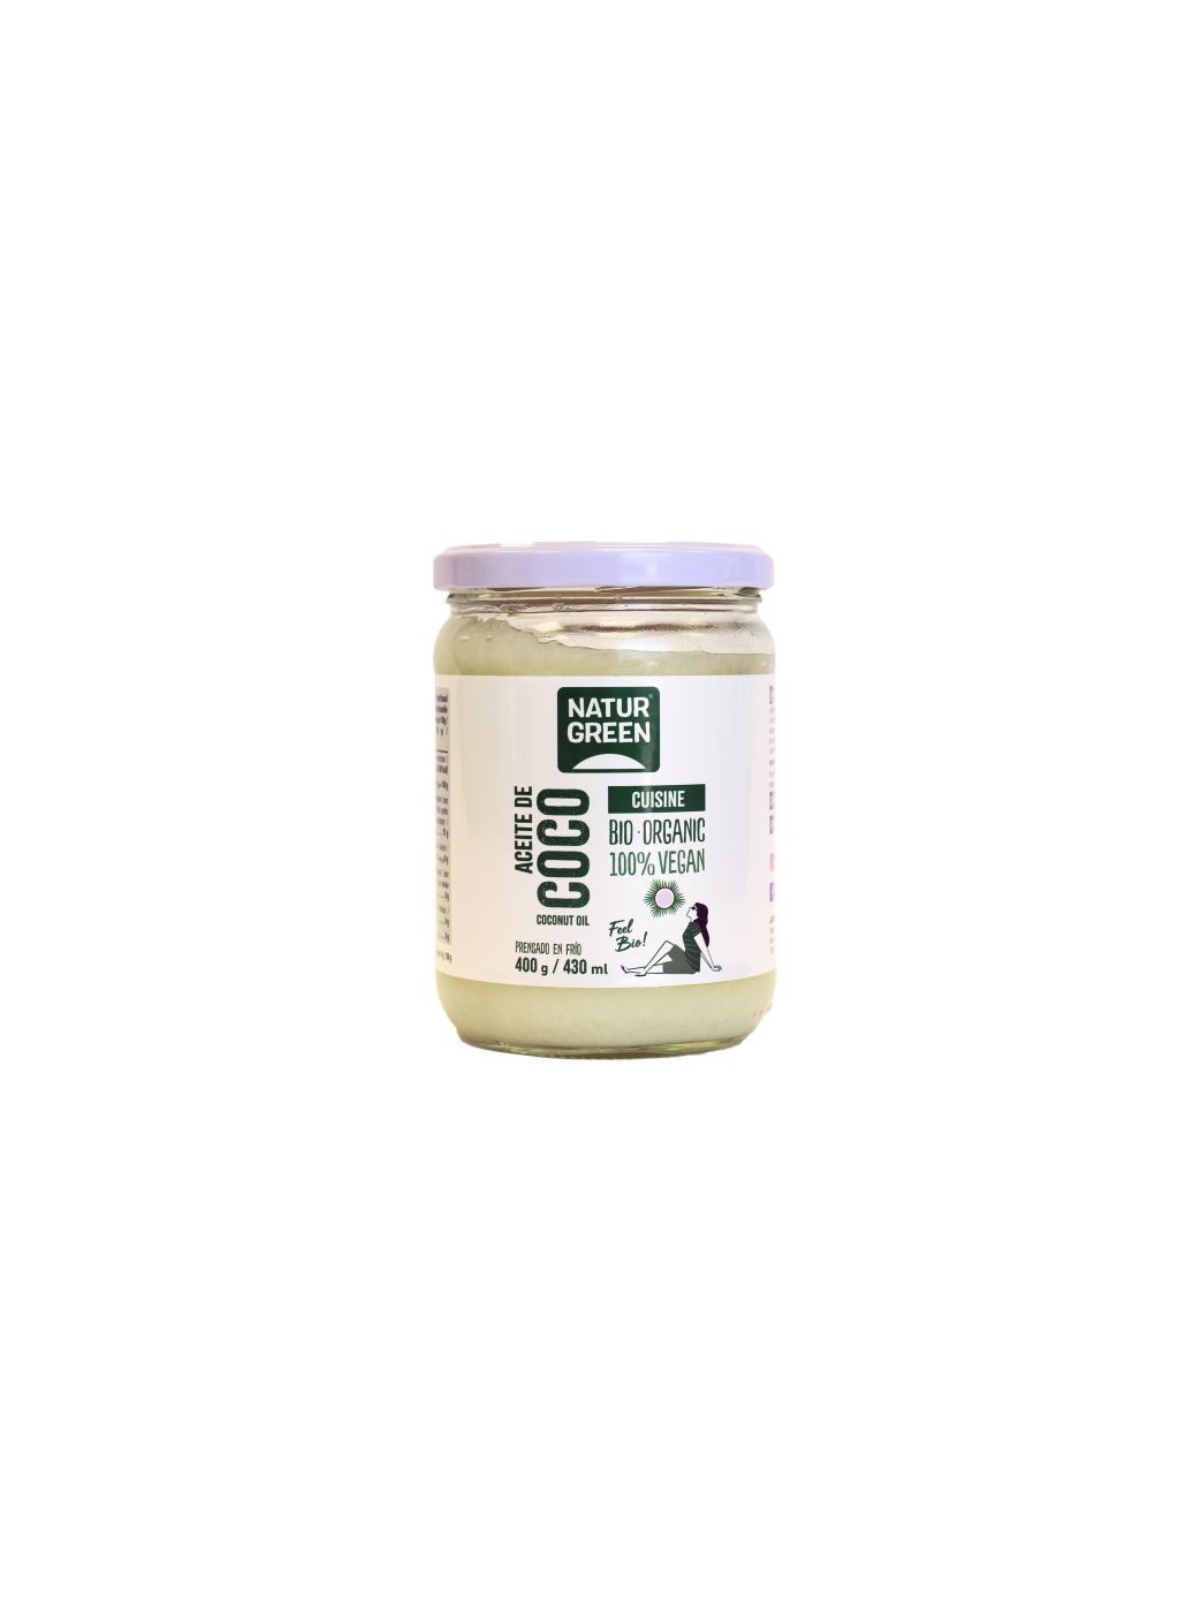 Aceite de Lino 1ª Presión en Frío Bio, 500 ml, Productos ecológicos